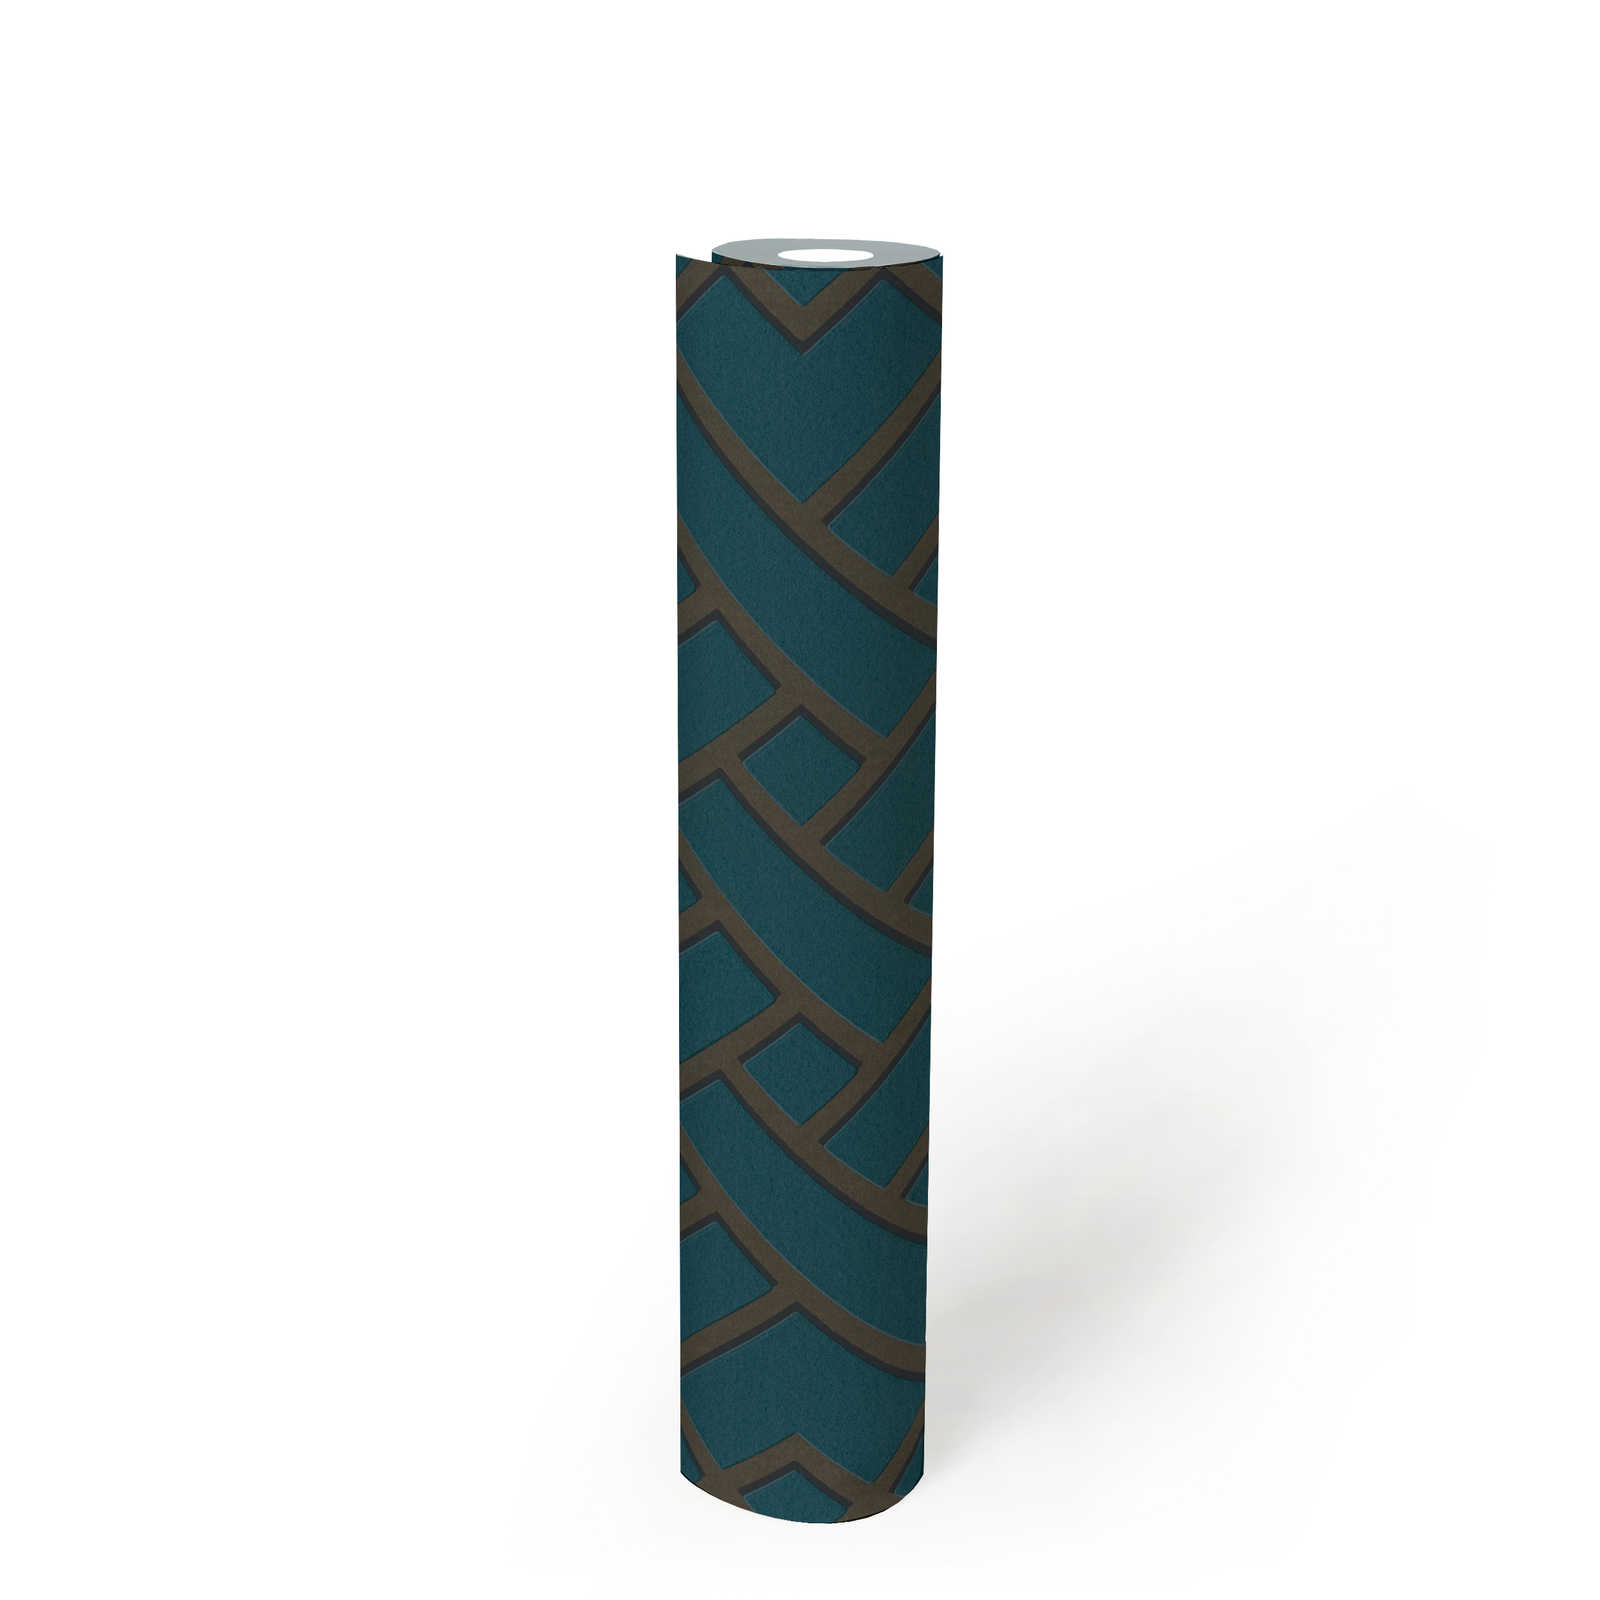             Design wallpaper petrol from MICHALSKY with 3D pattern - green, metallic
        